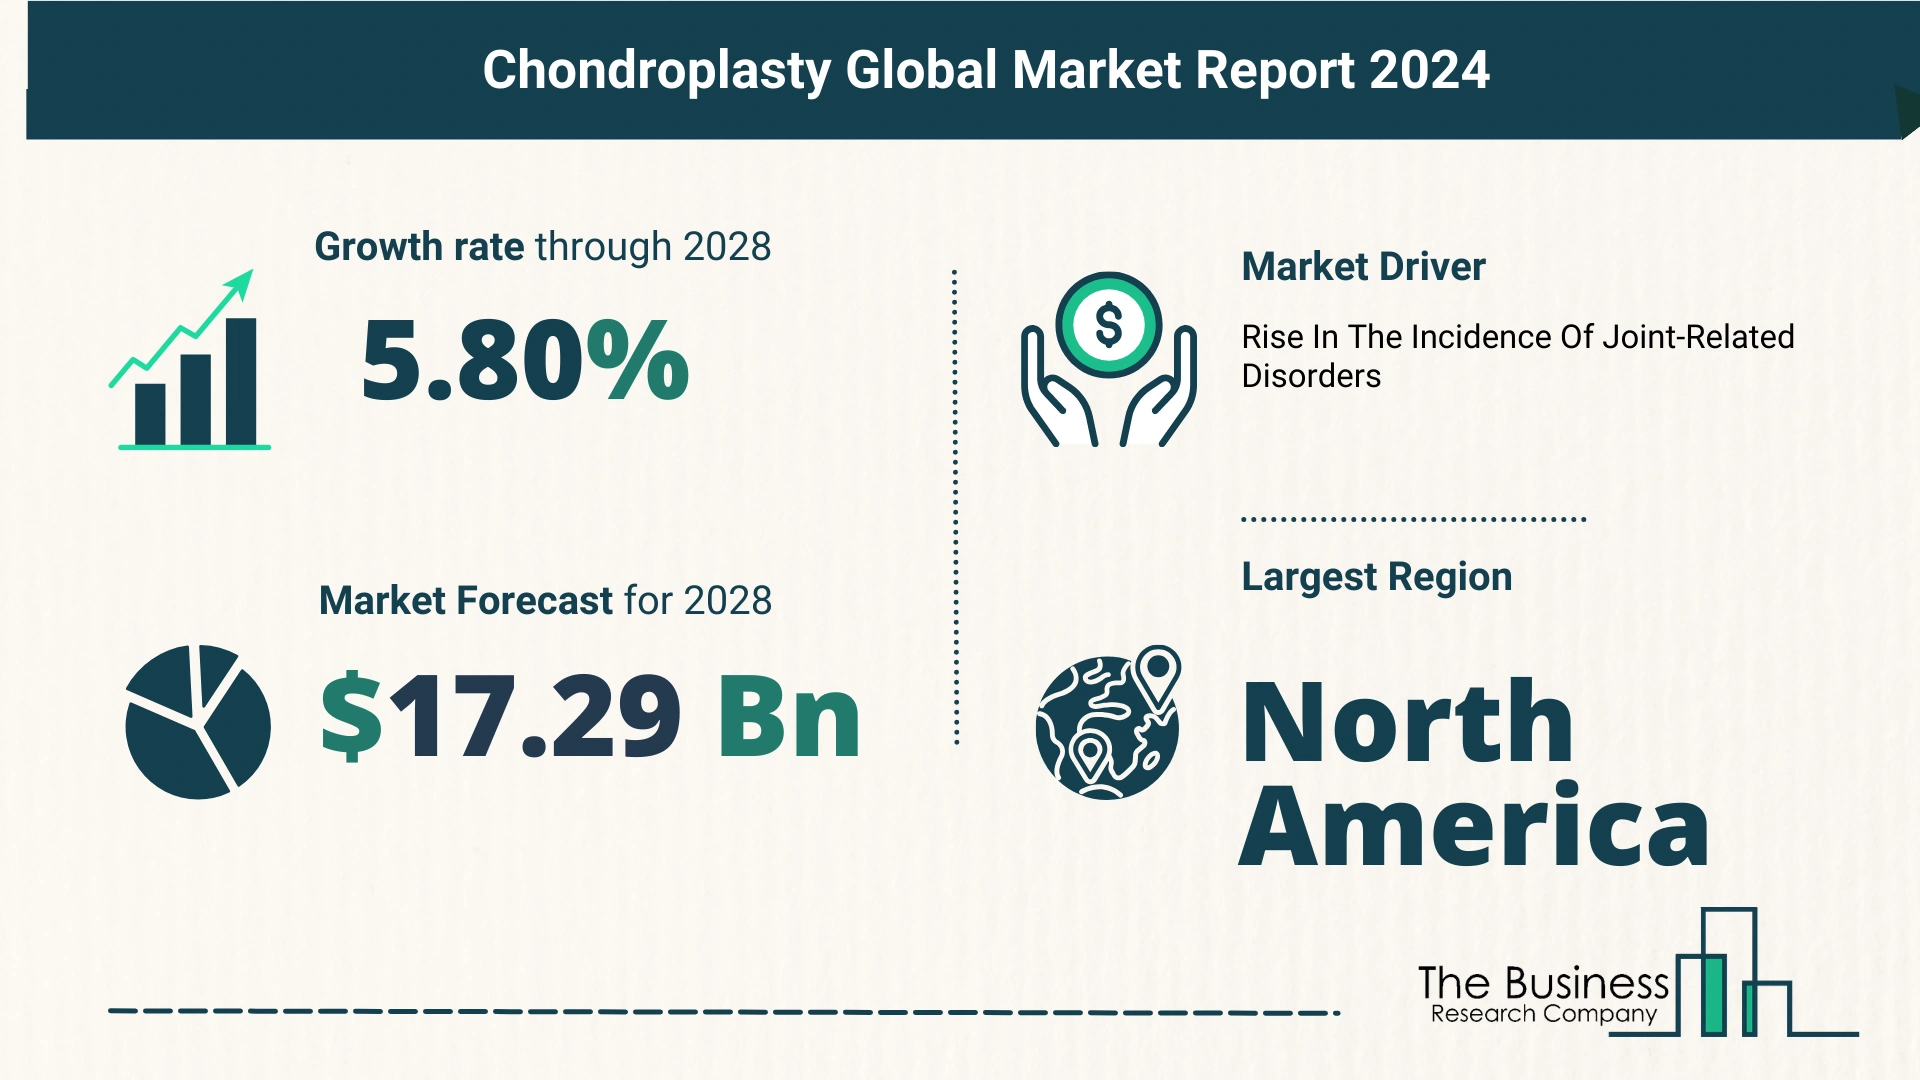 Global Chondroplasty Market